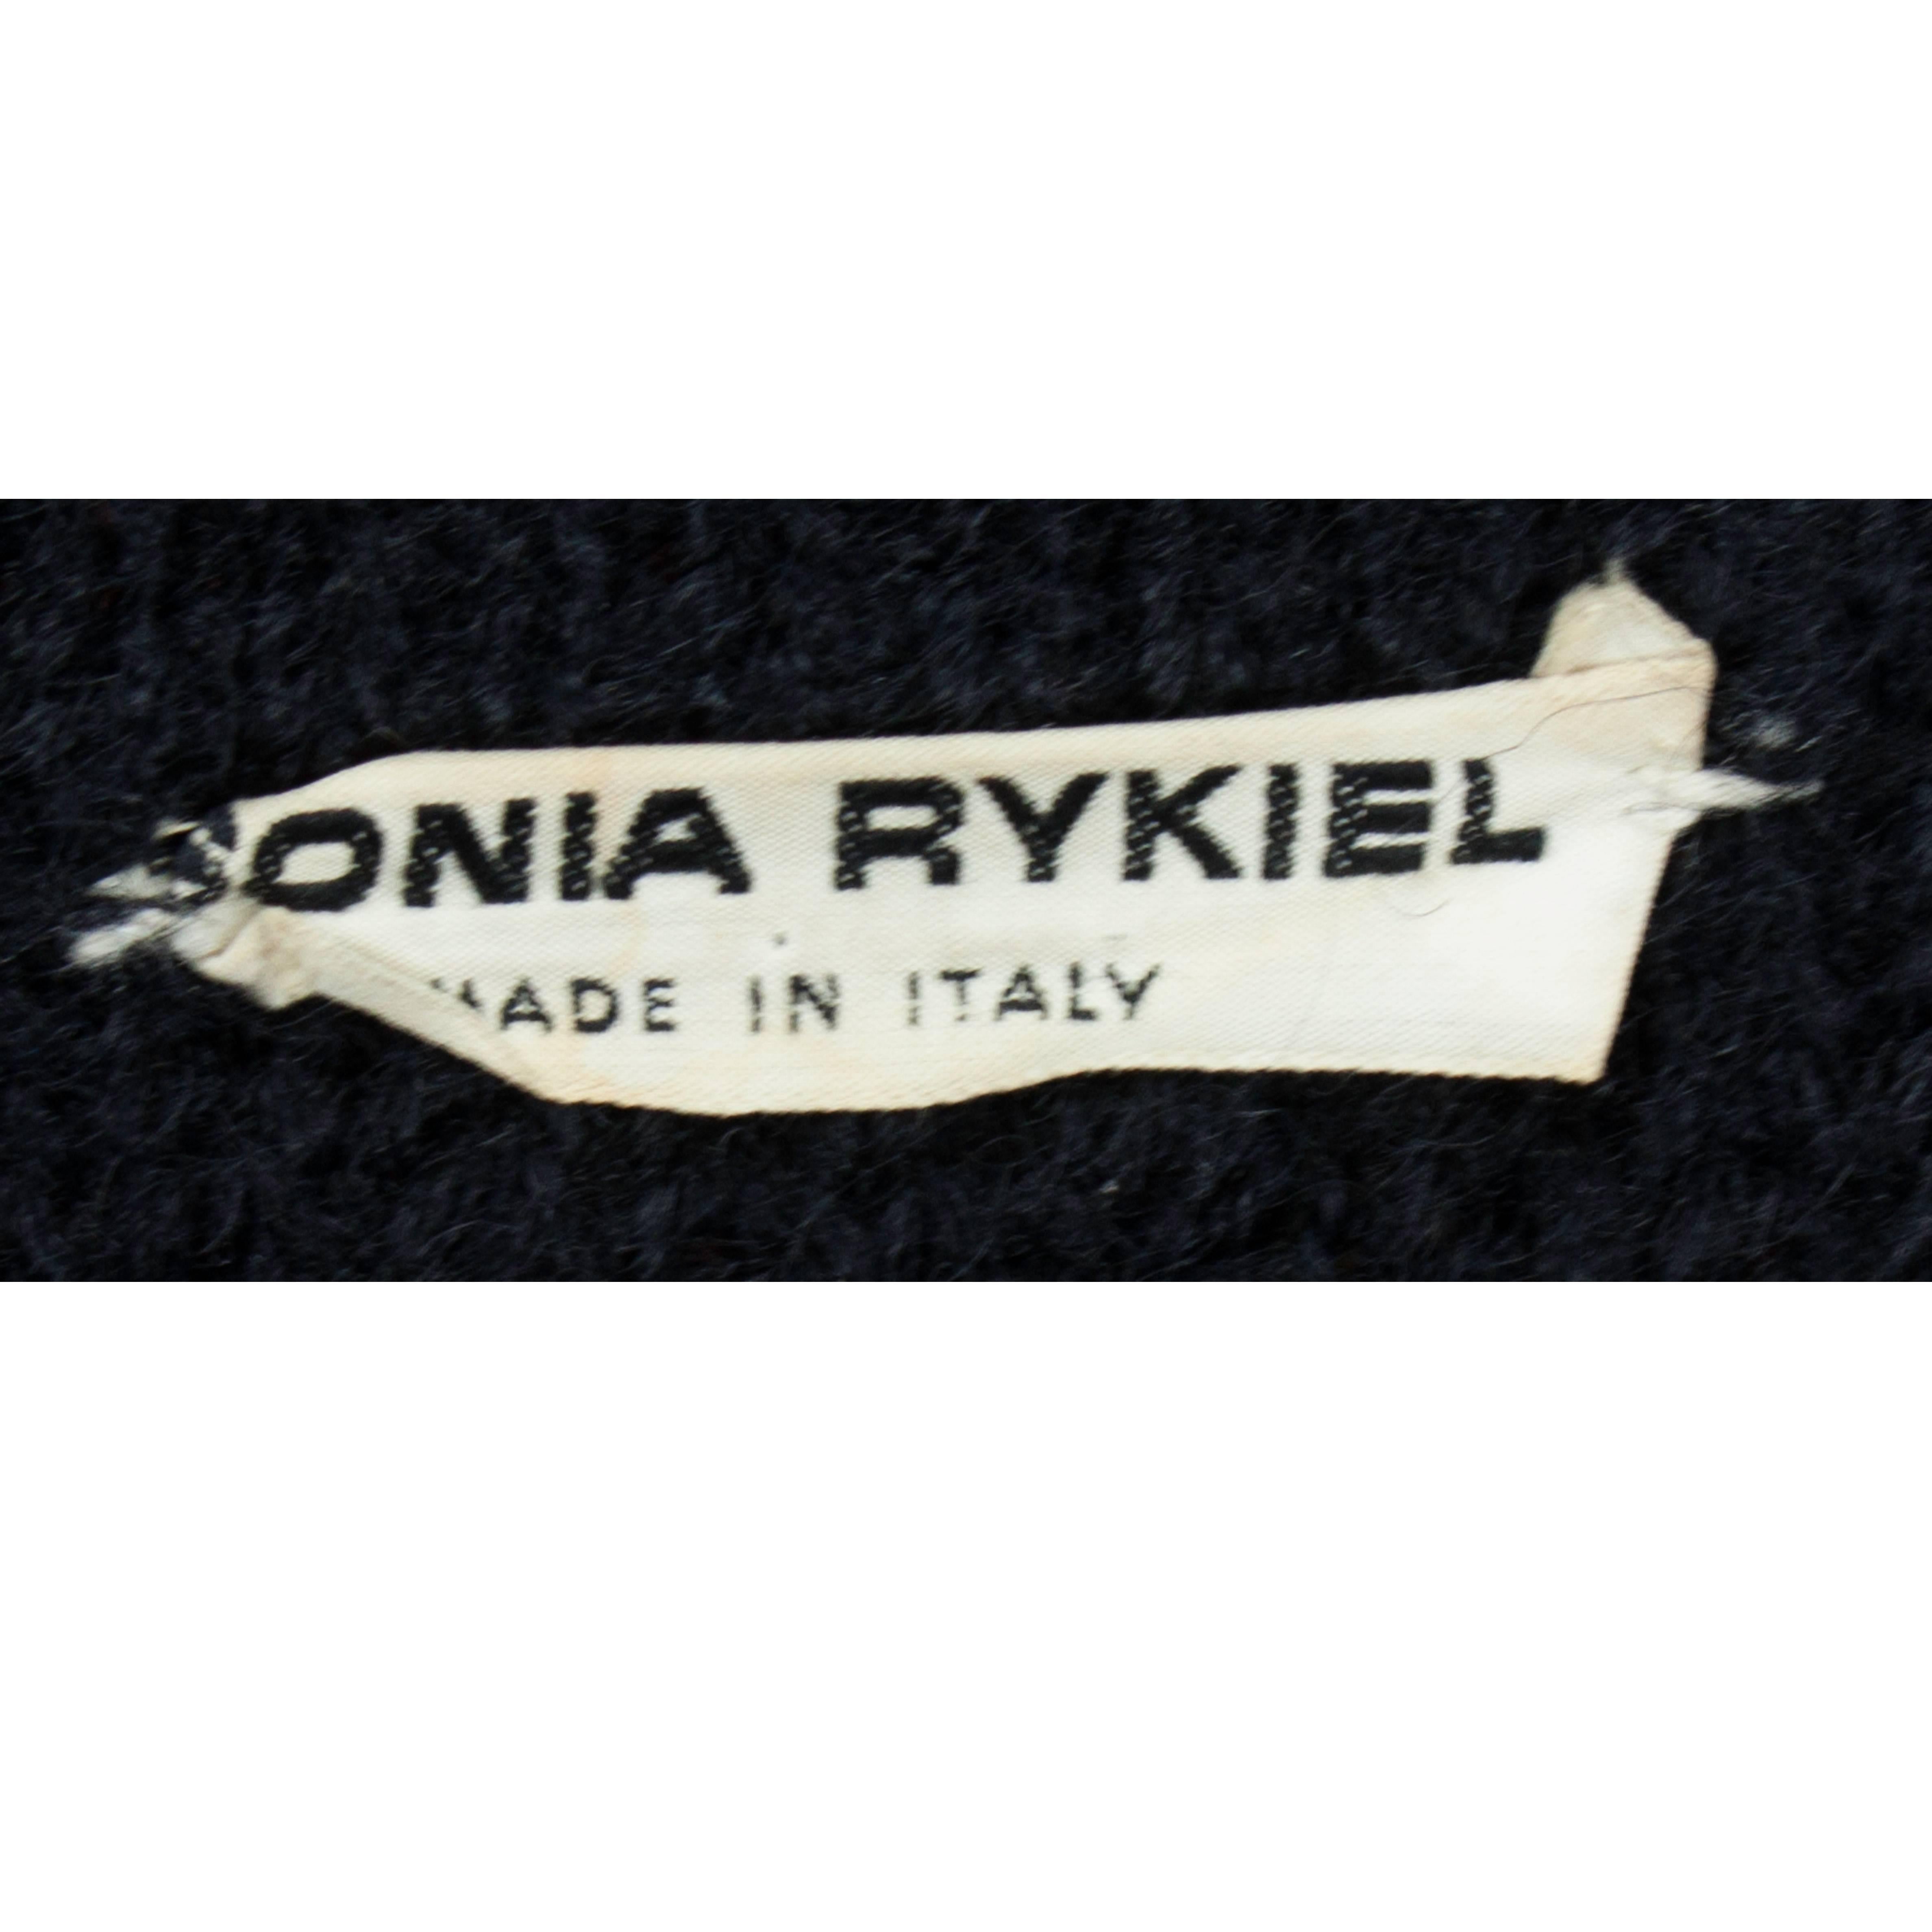 Sonia Rykiel Early knitted black wool coat, circa 1960s 4